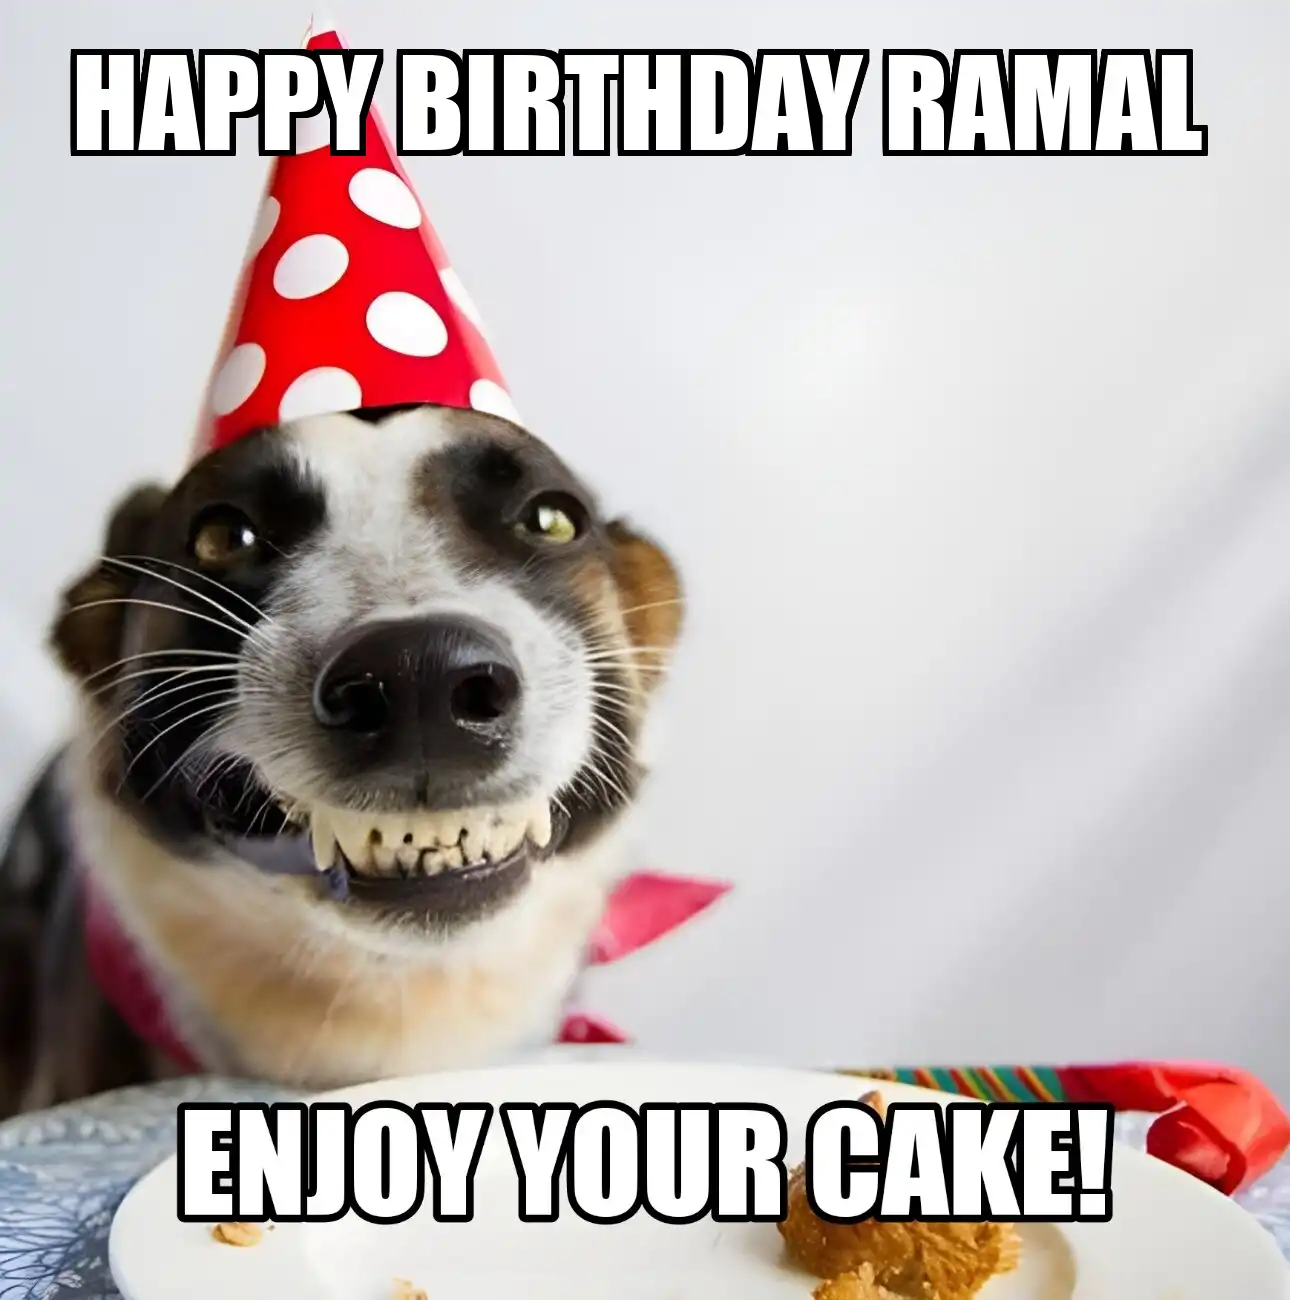 Happy Birthday Ramal Enjoy Your Cake Dog Meme